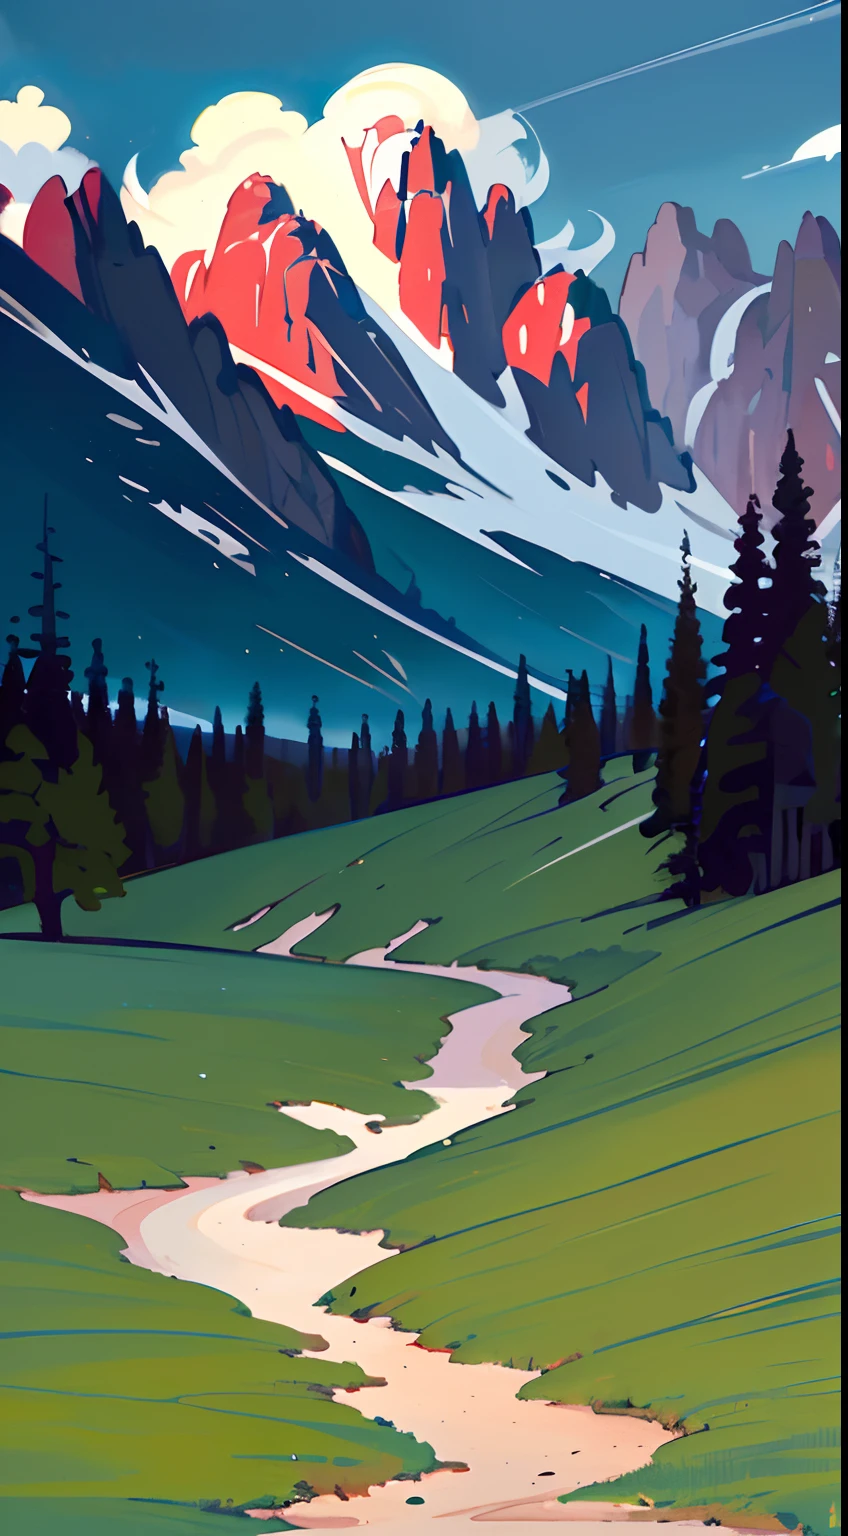 Sargent와 Rhads, Leyendecker와 Greg Hildebrandt의 그림 저녁 하늘, 추크슈피체 피츠 로이(Zugspitze Fitz Roy)를 배경으로 한 인도의 여름에 나무가 있는 낮은 천둥 구름 발자국, 색상 녹색, 빨간색, 파란색 흑백, 수채화